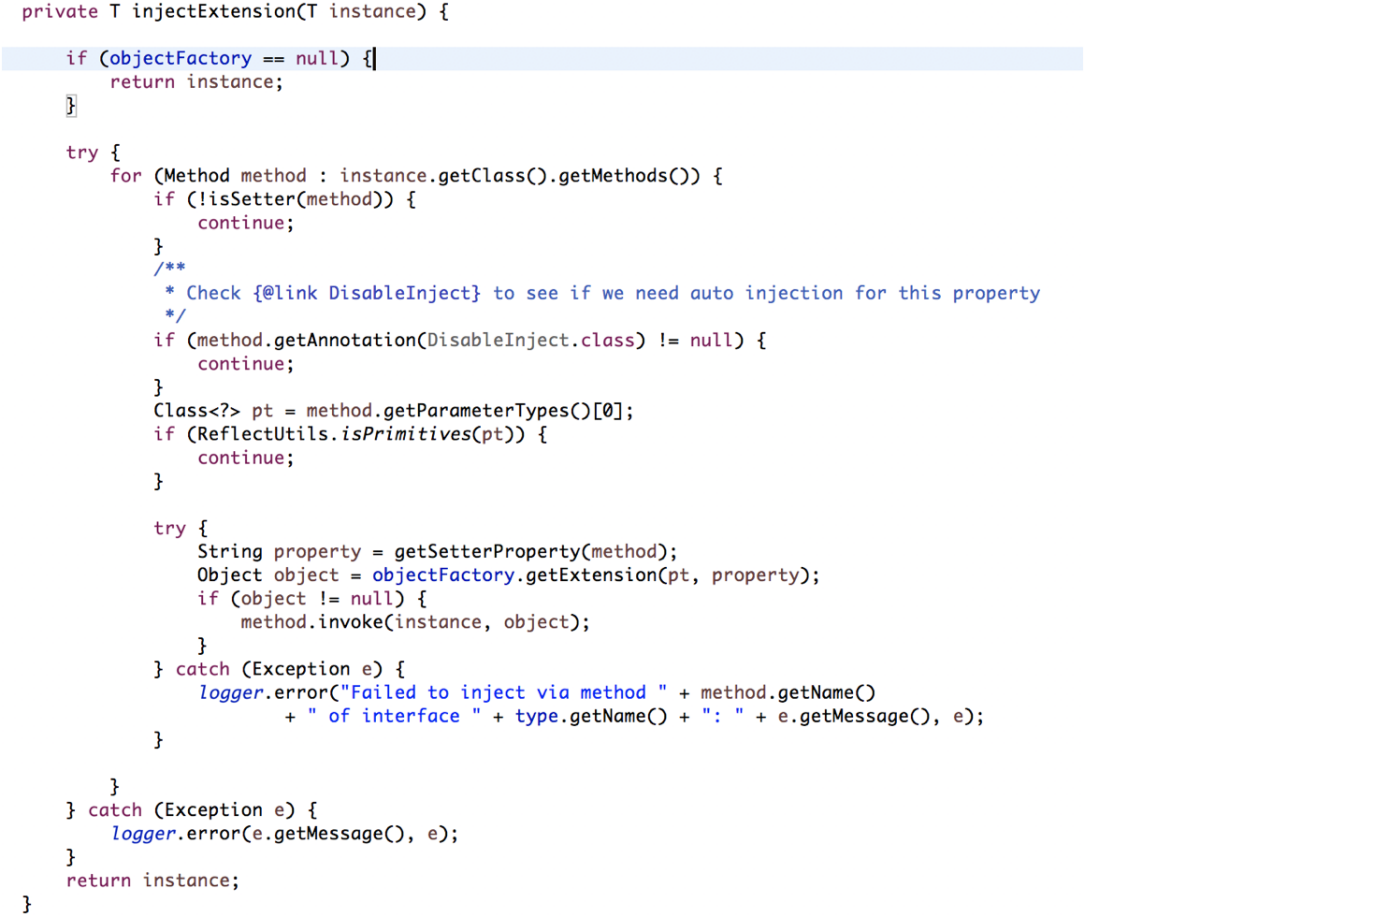 Dubbo源码解析之SPI（一）：扩展类的加载过程